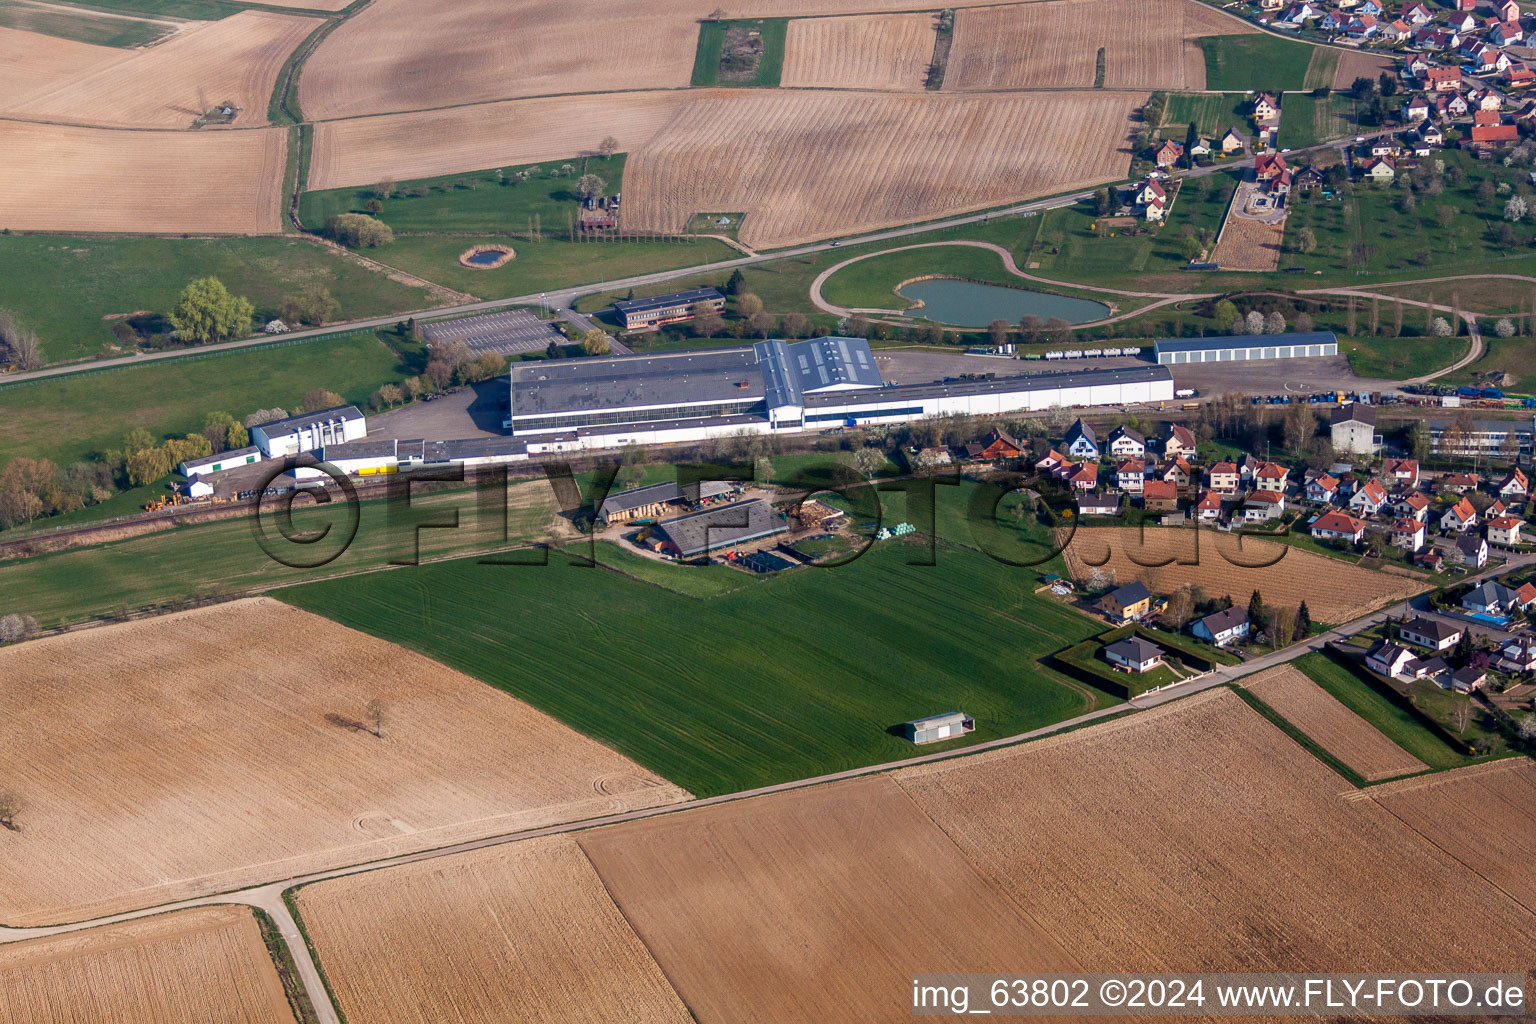 Luftbild von Produktionshallen in Soultz-sous-Forets in Grand Est in Soultz-sous-Forêts im Bundesland Bas-Rhin, Frankreich